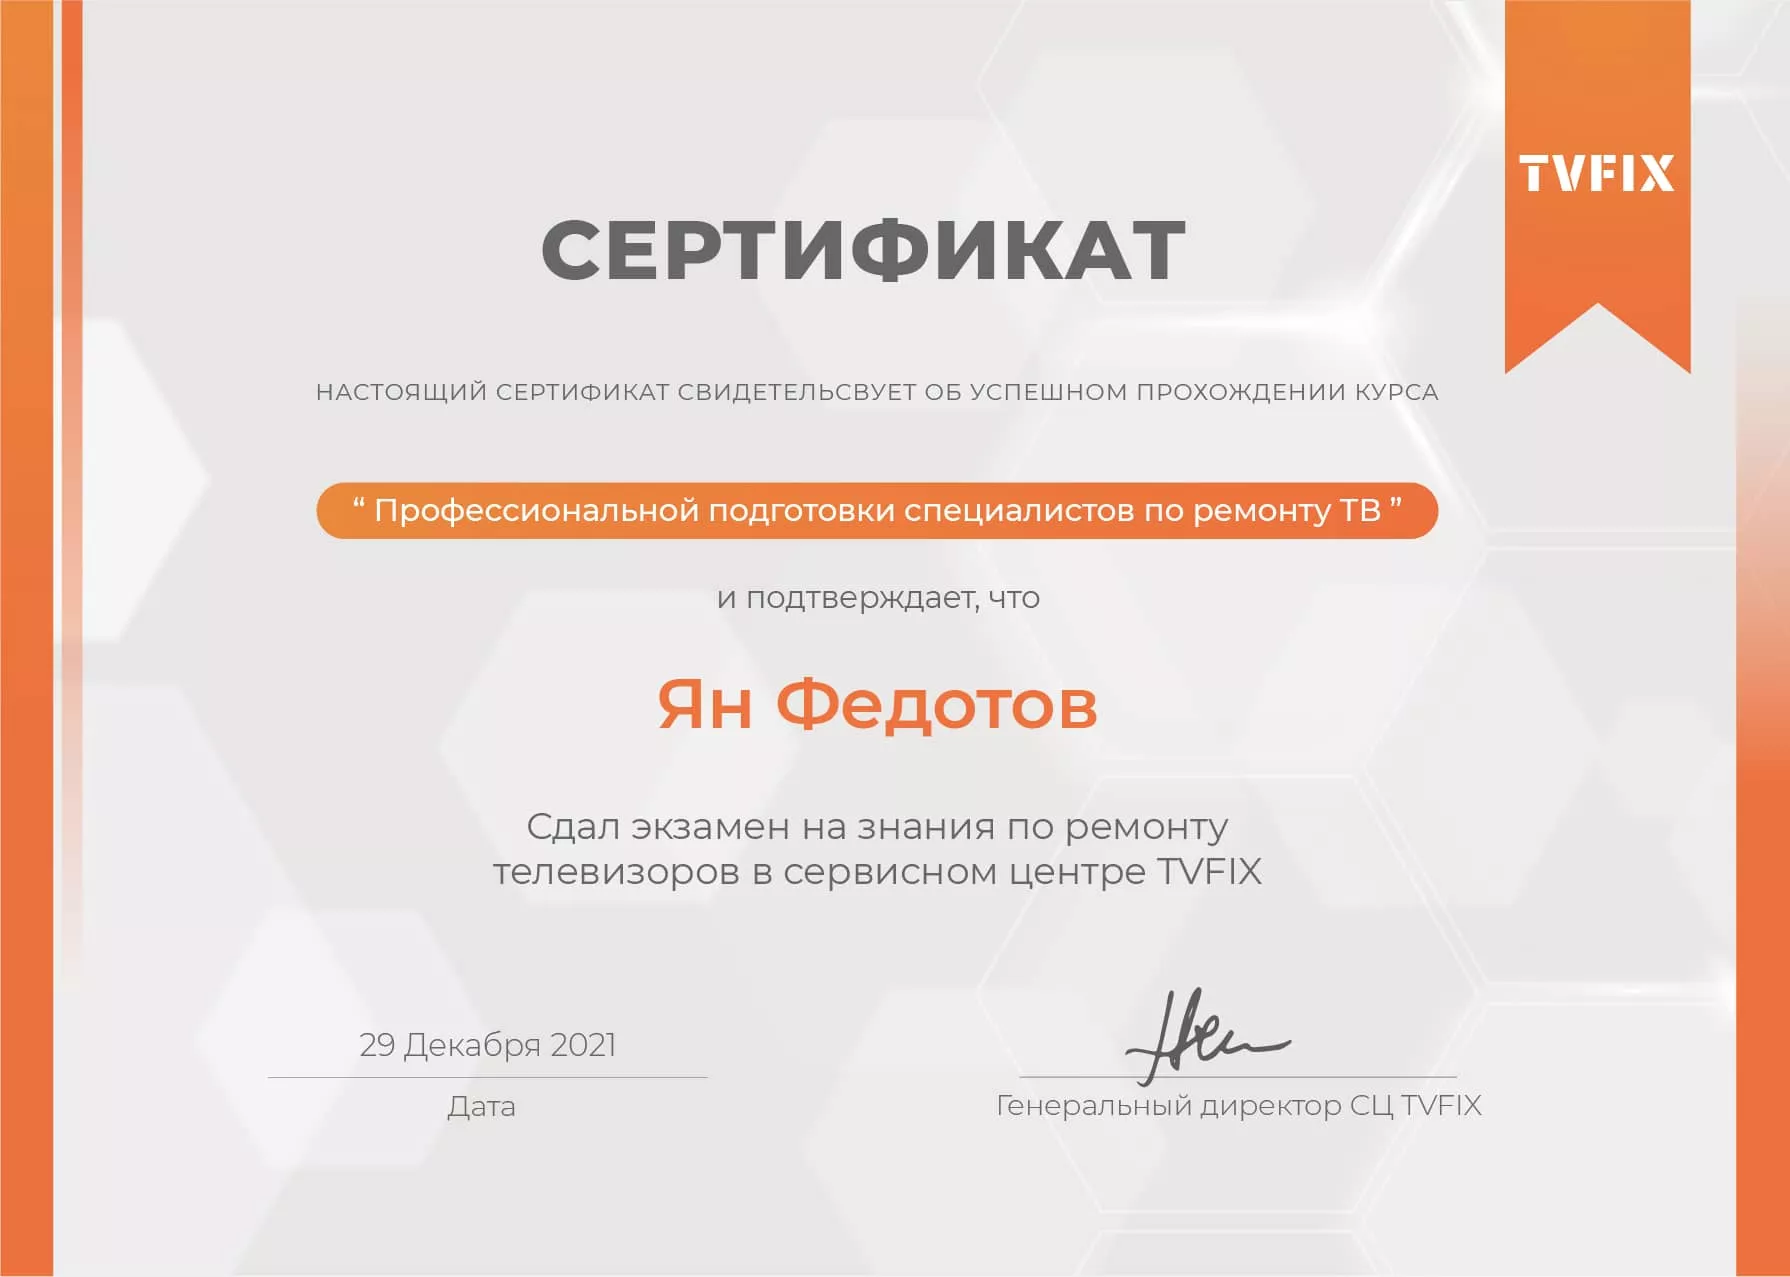 Ян Федотов сертификат телемастера